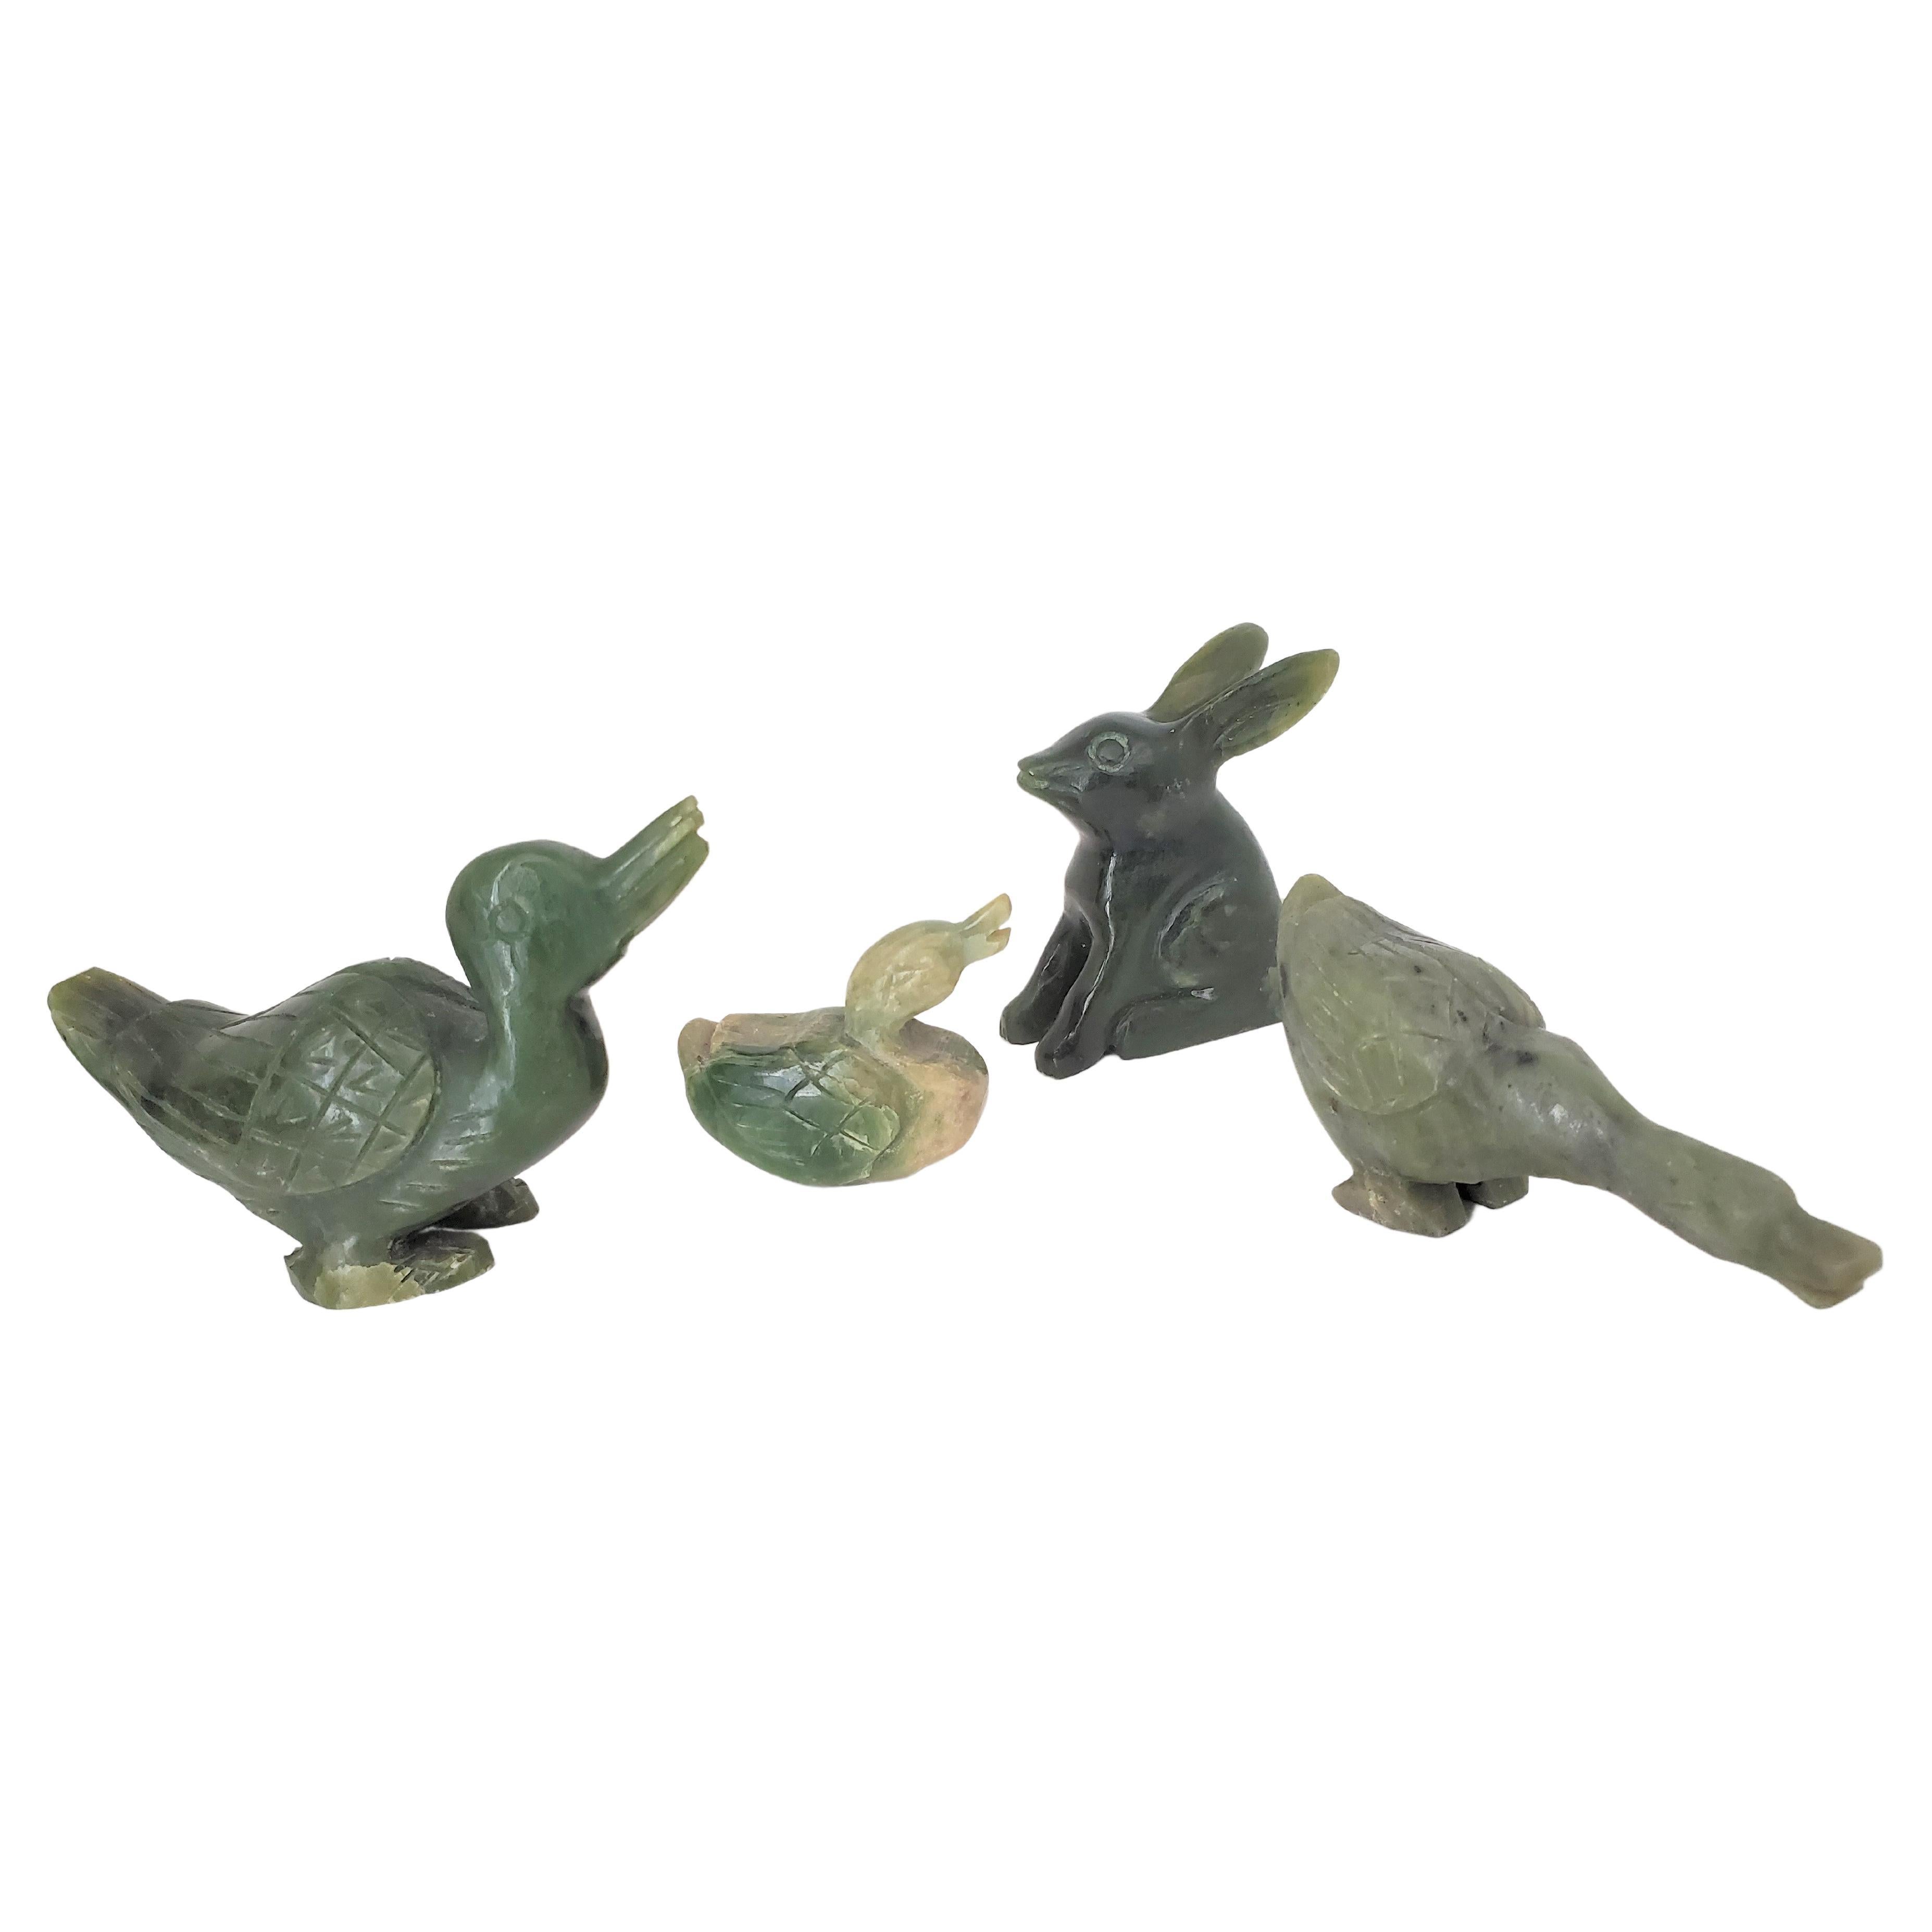 Figures de canards et de lapins en jade épinard naturel de la dynastie Qing